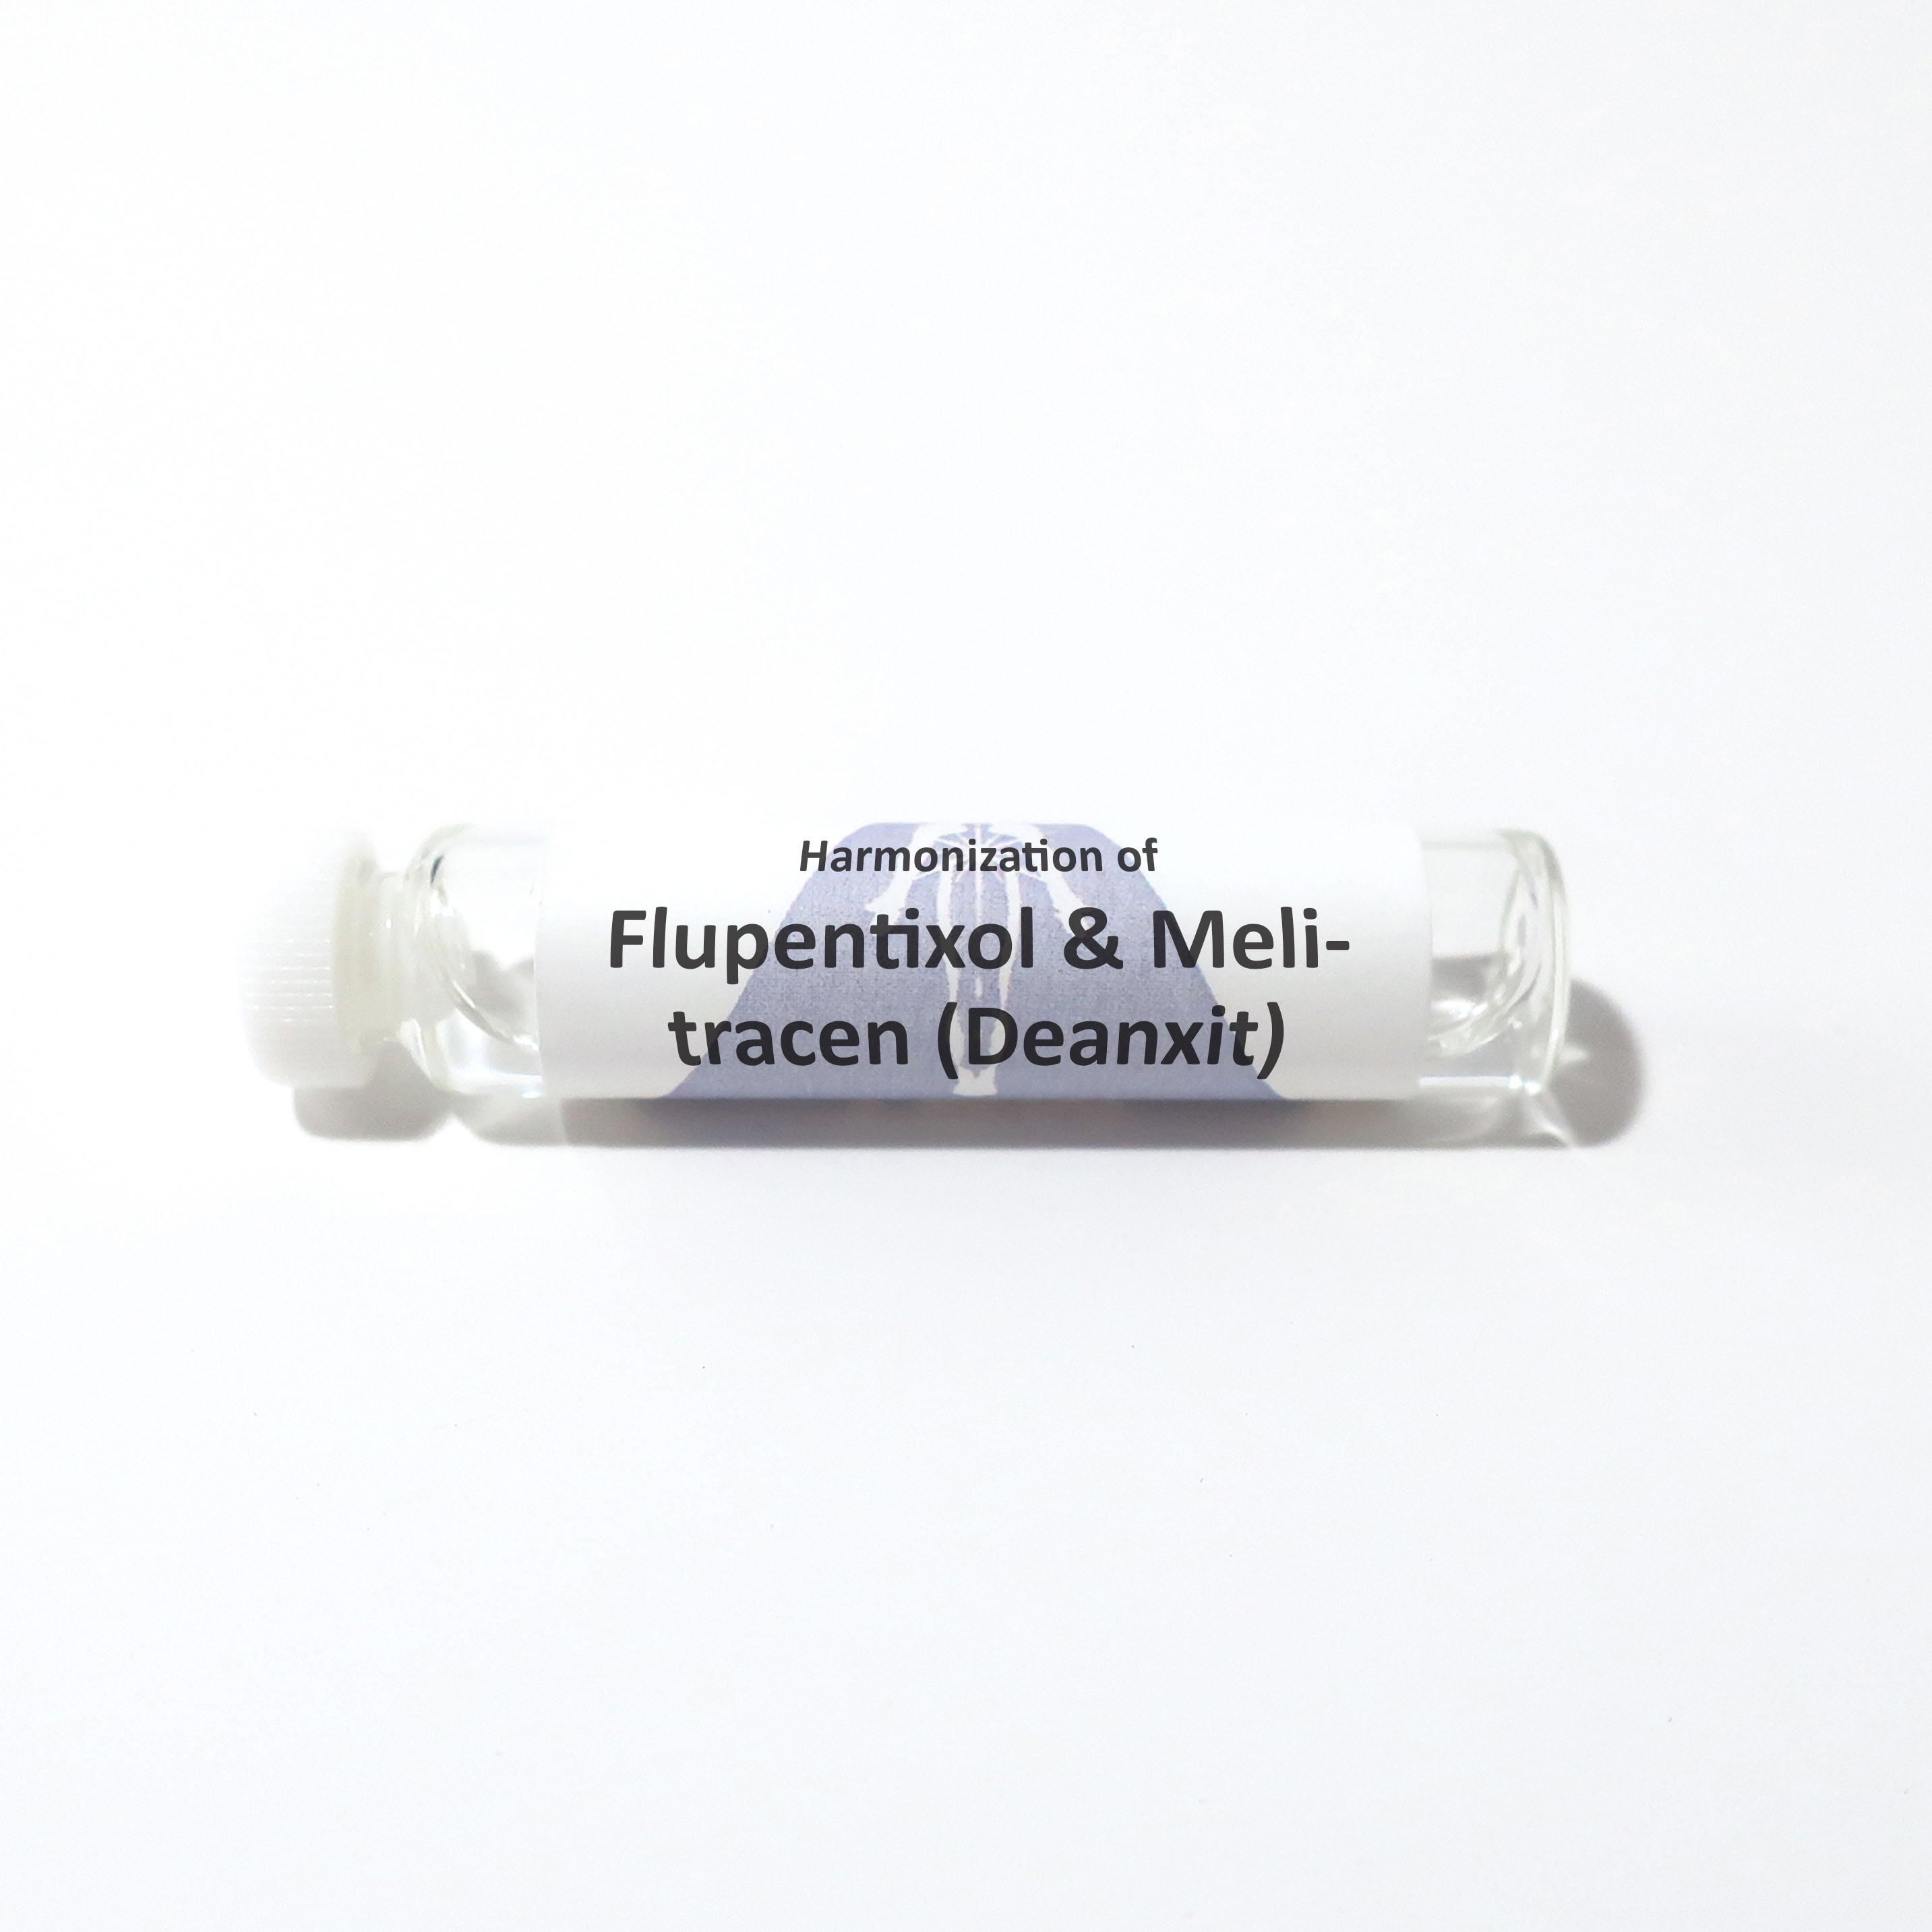 Flupentixol & Melitracen (Deanxit)